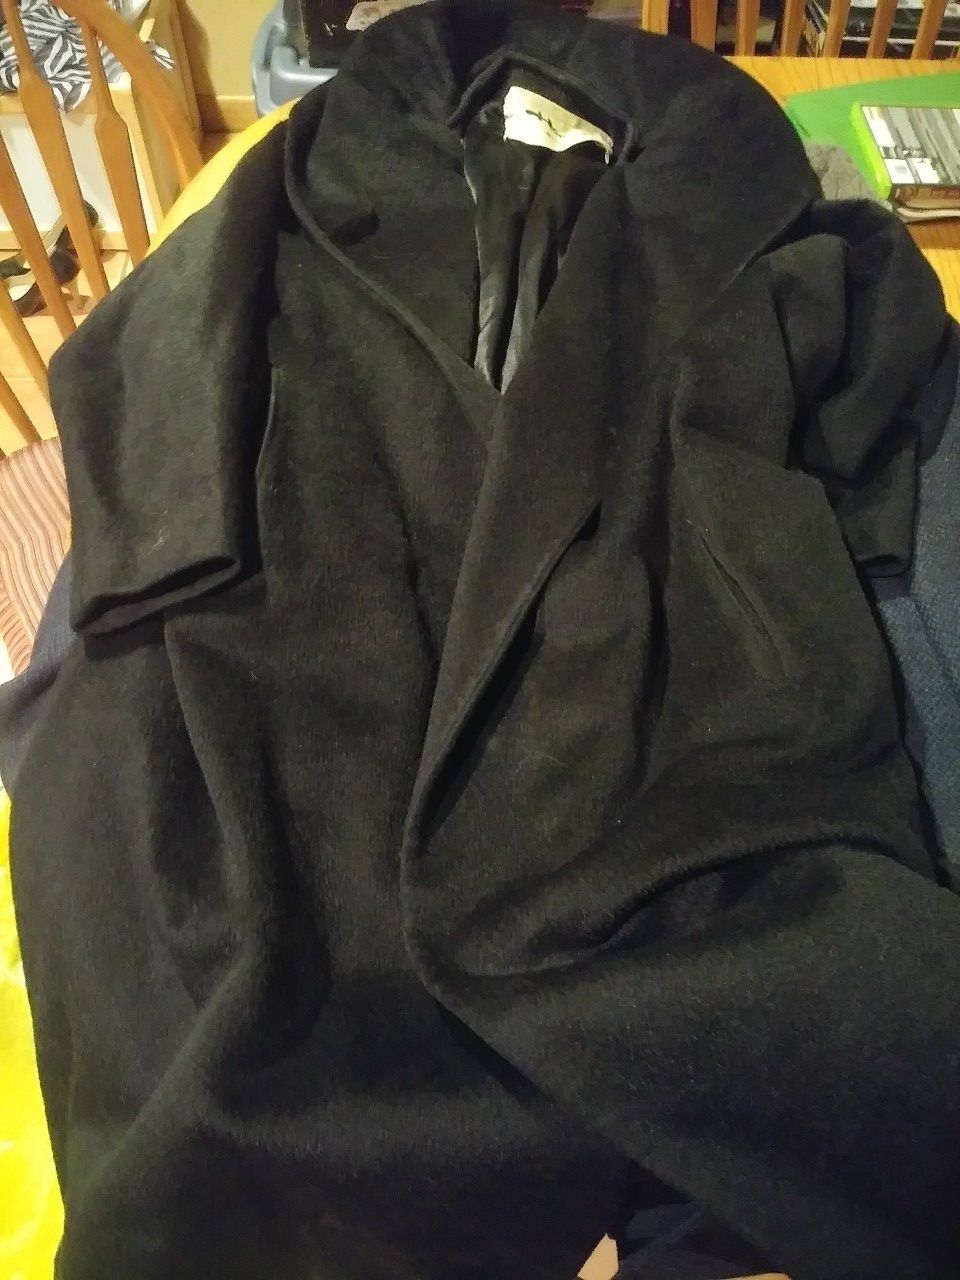 Wool women's coat, 2 suit jackets & skirt